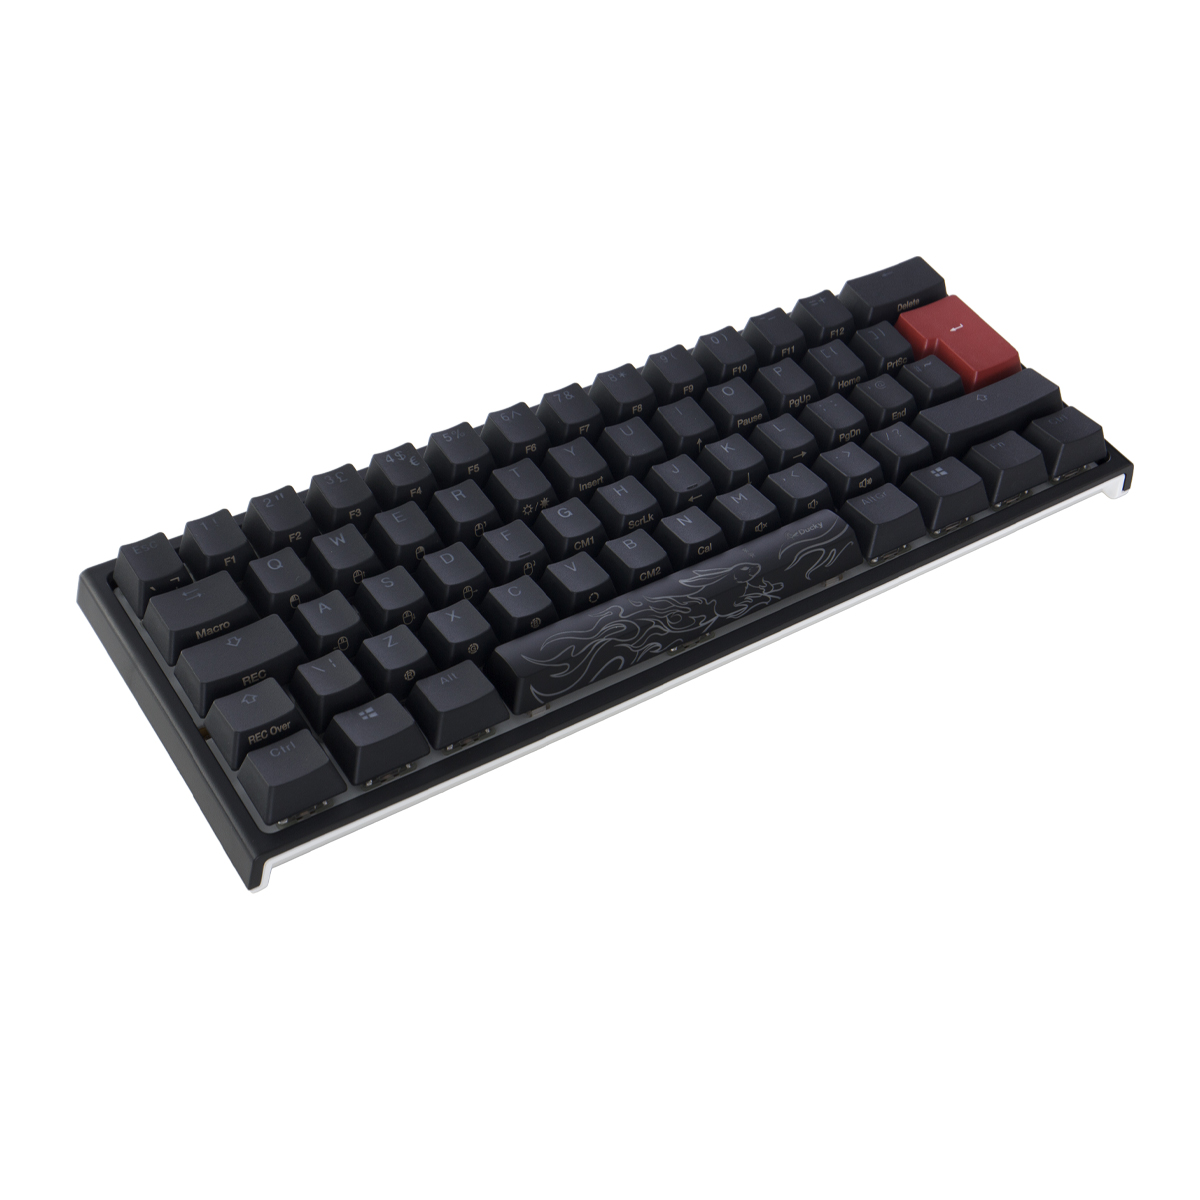 Ducky - Ducky One 2 Pro Mini 60% Mechanical Gaming Keyboard Black MX Cherry Silver Switch - UK Layout